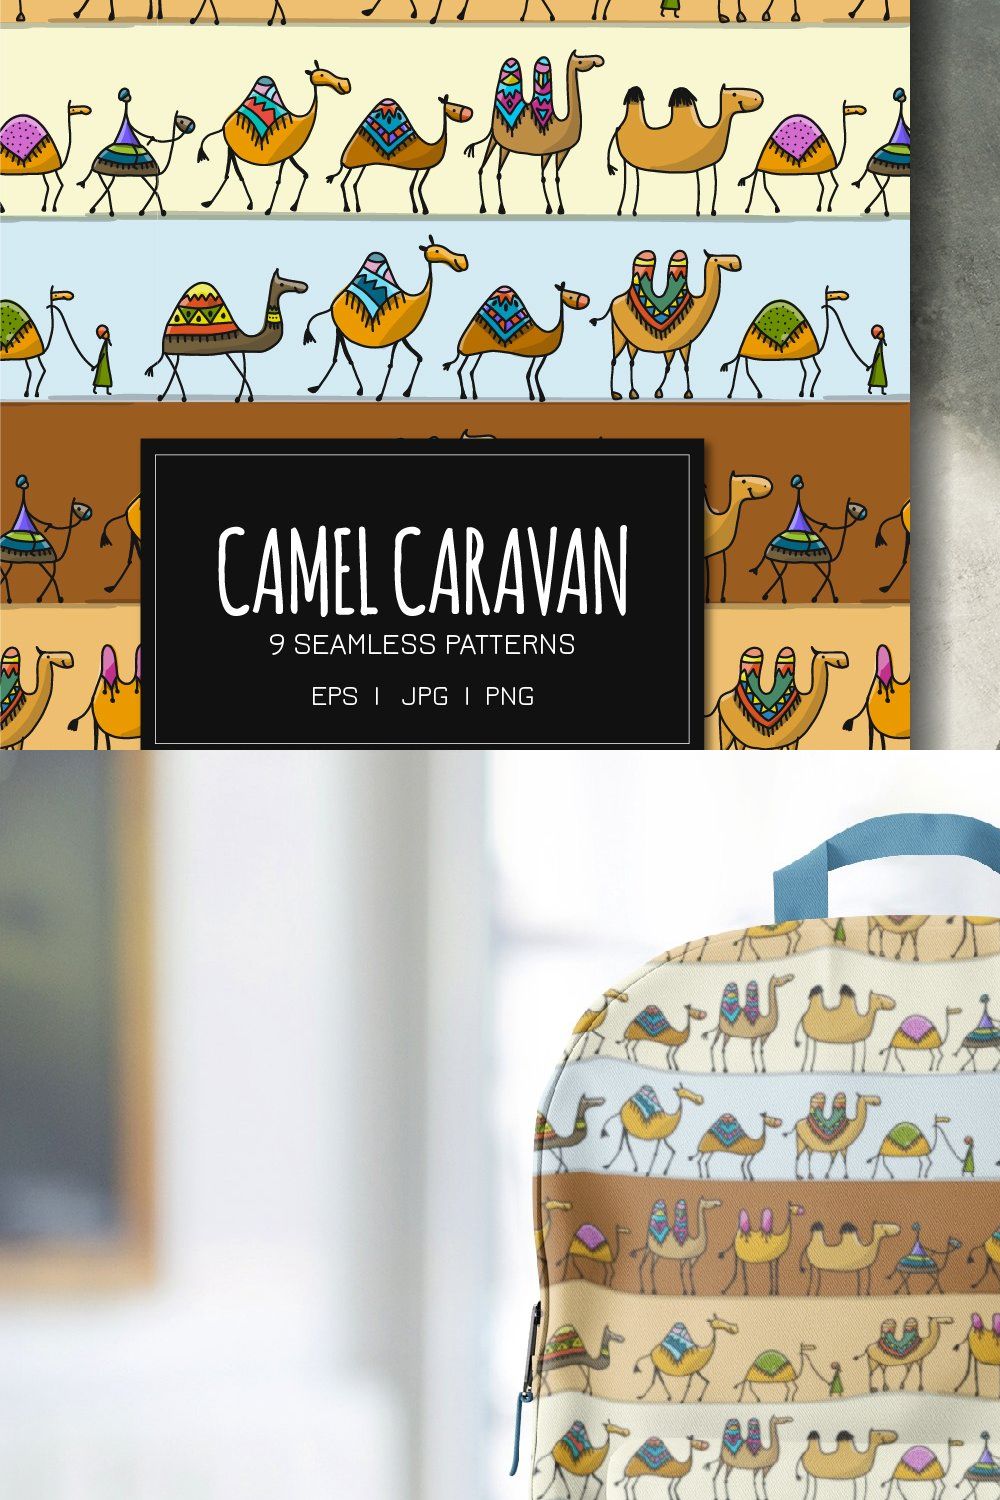 Camels caravan. 9 seamless pattern pinterest preview image.